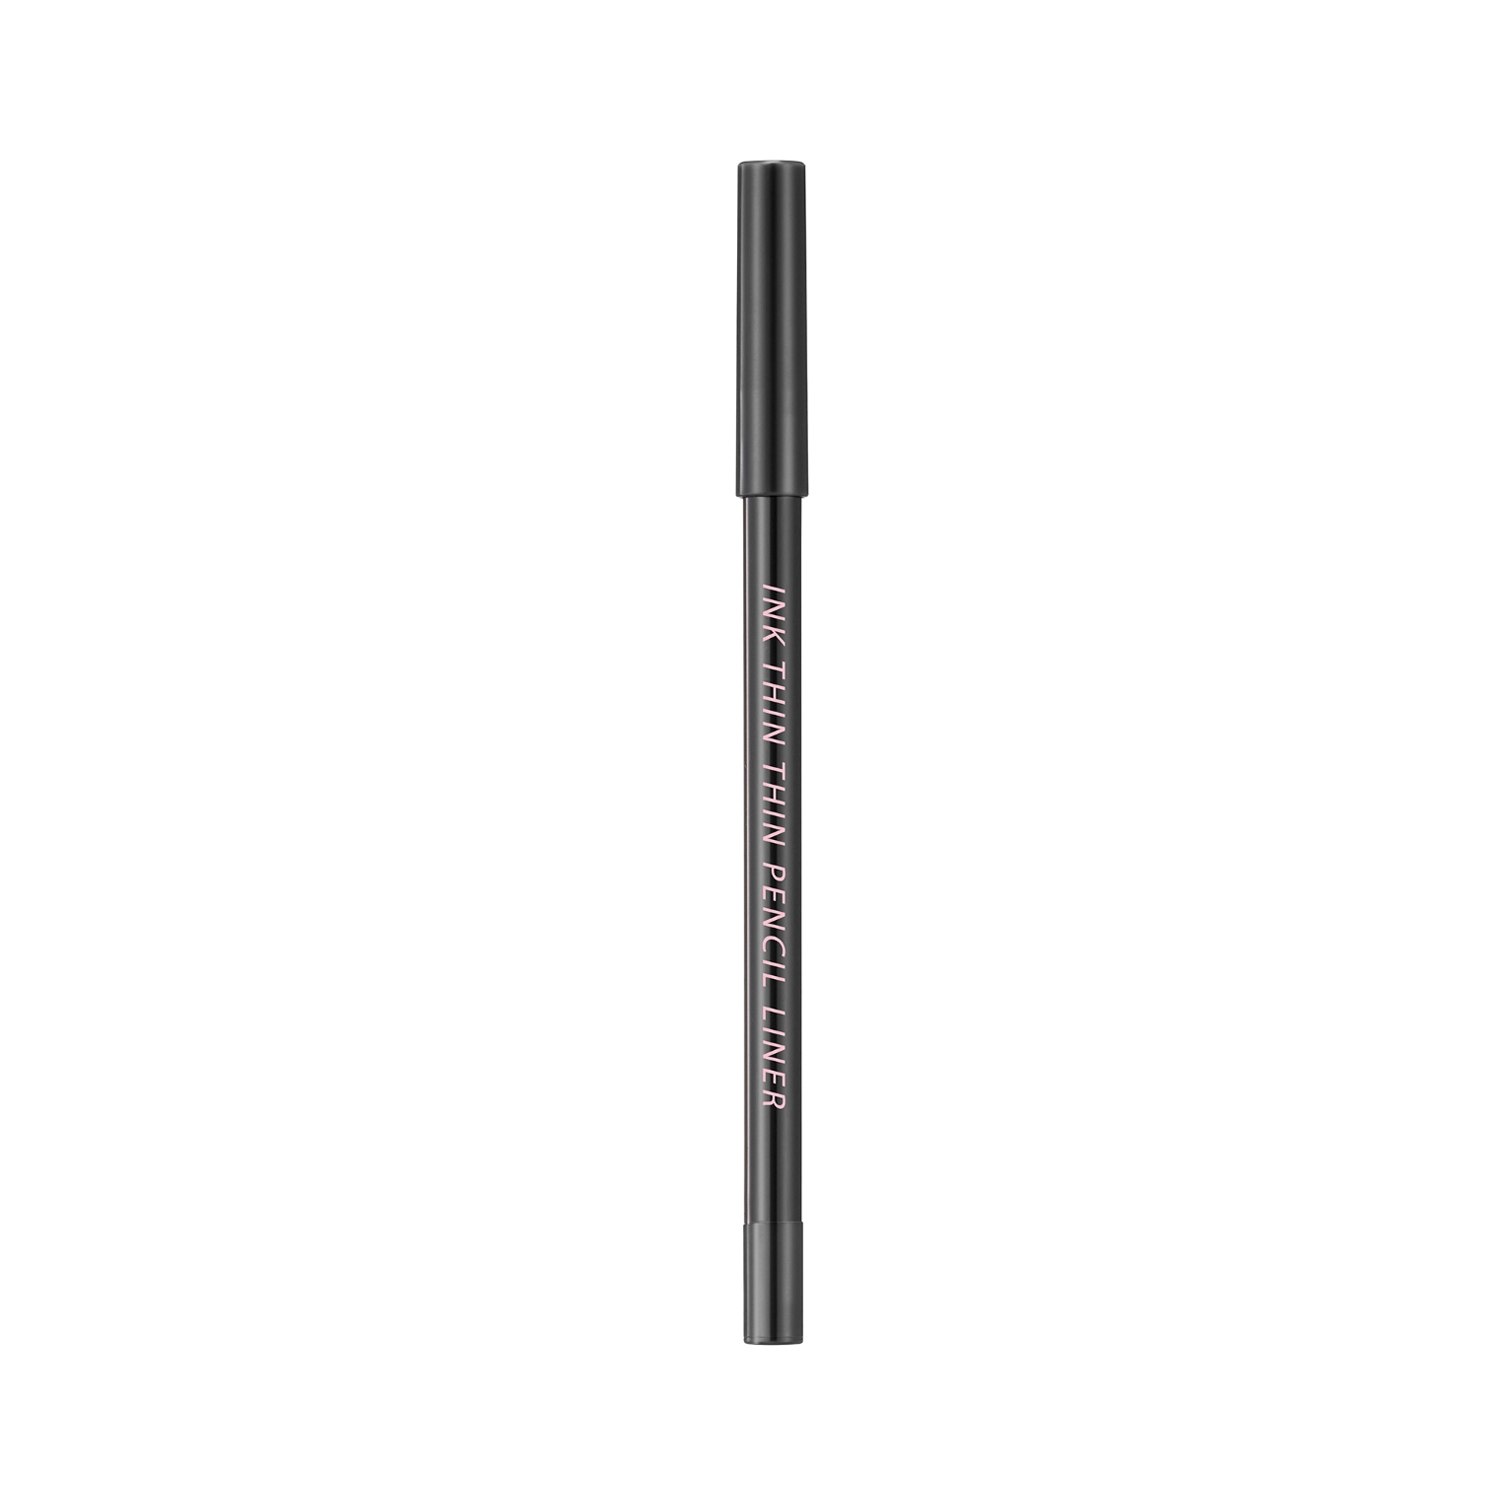 Peripera | Peripera Ink Thin Thin Pencil Eyeliner - 04 Roasting Black (0.13g)